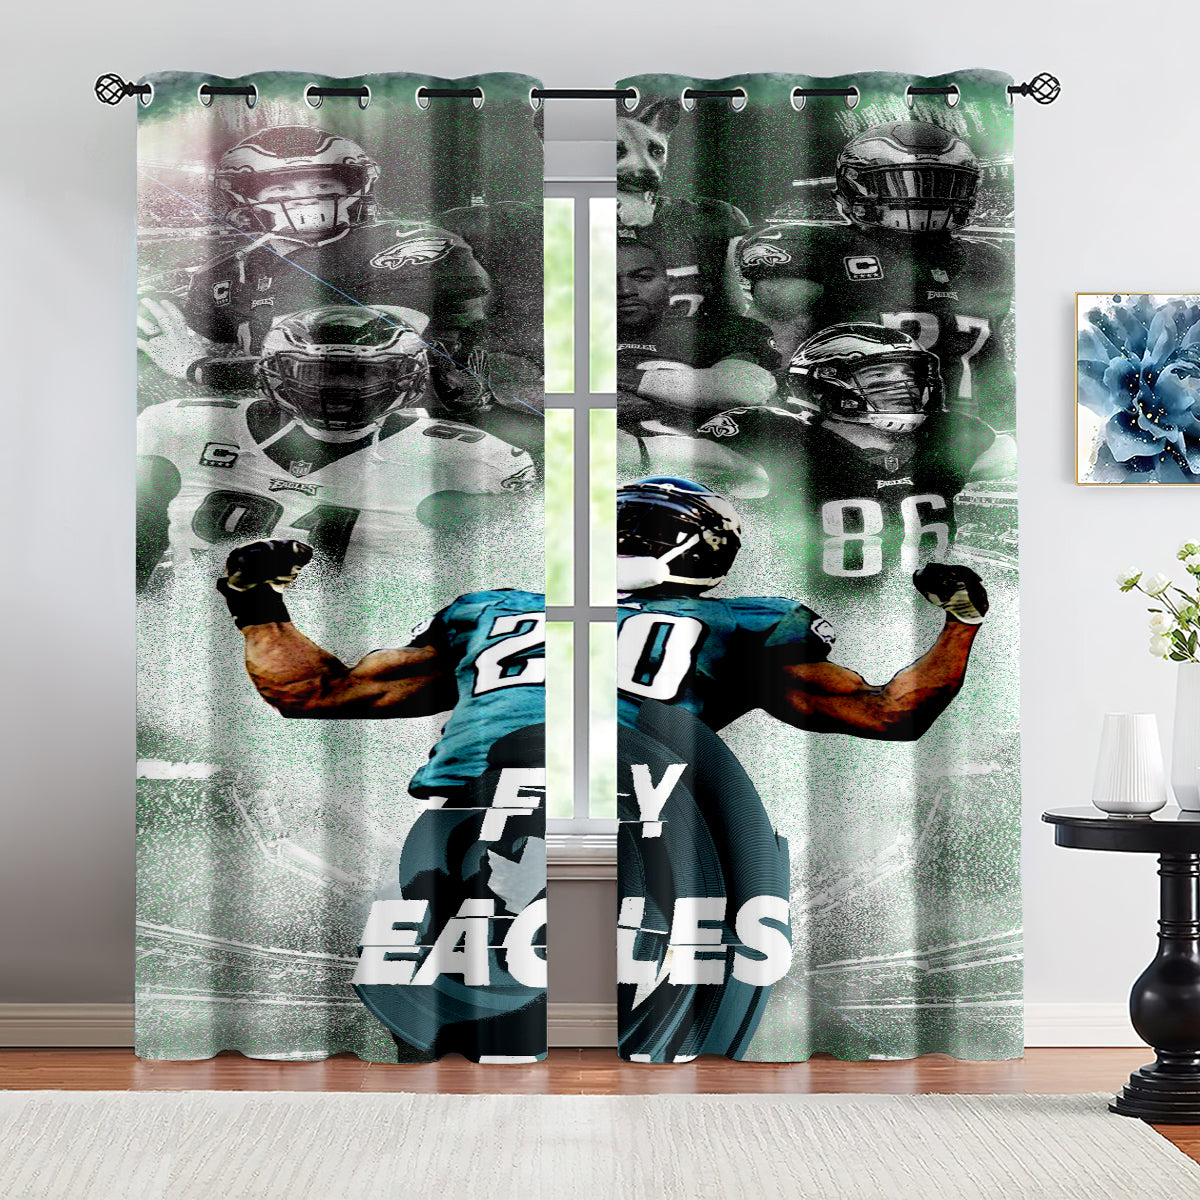 Philadelphia Eagles Football League Curtains Blackout Window Treatments Drapes Room Decor